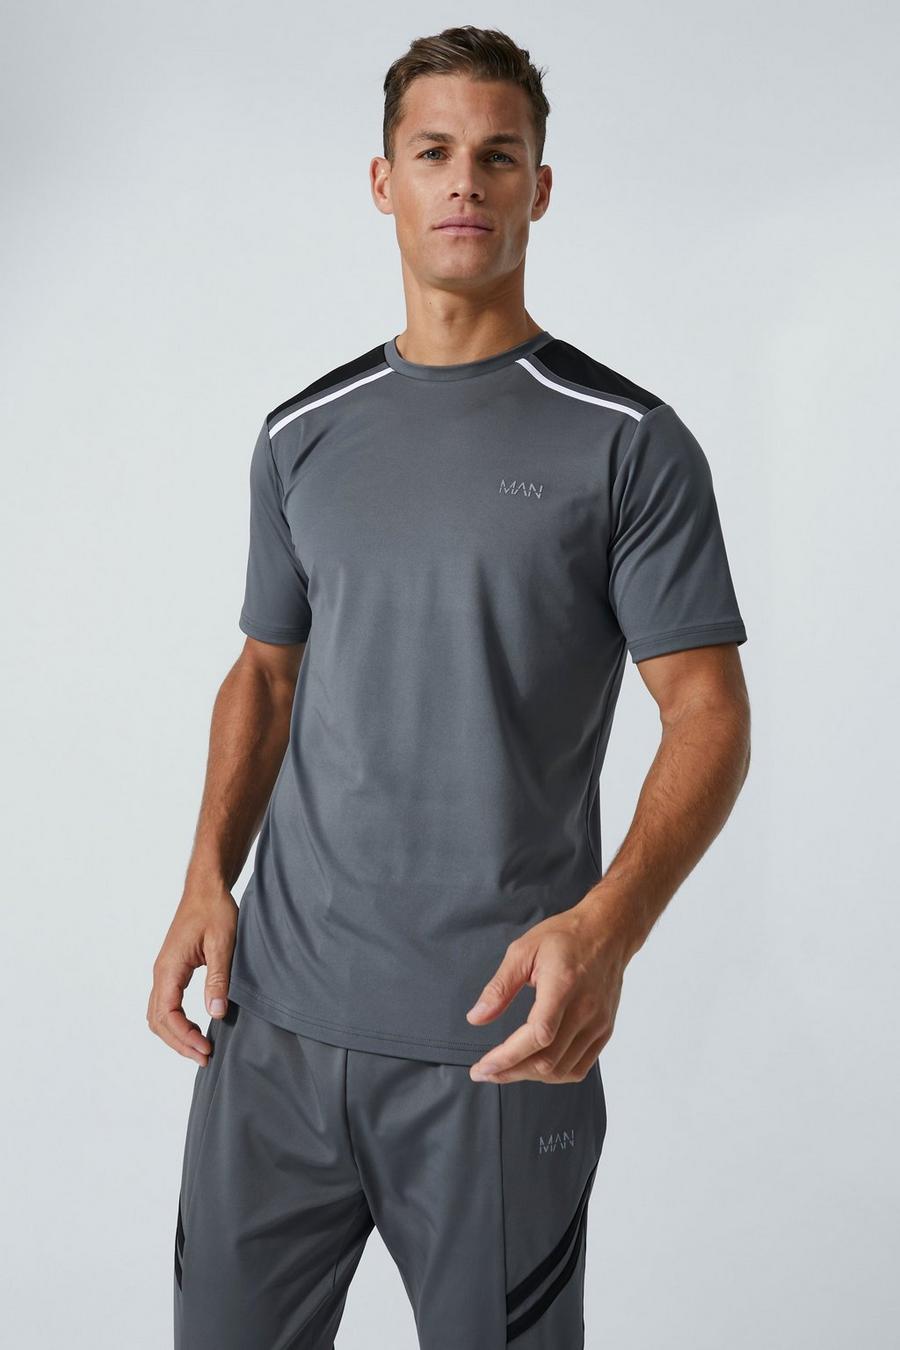 Charcoal grey Tall Man Active Performance Training T-shirt